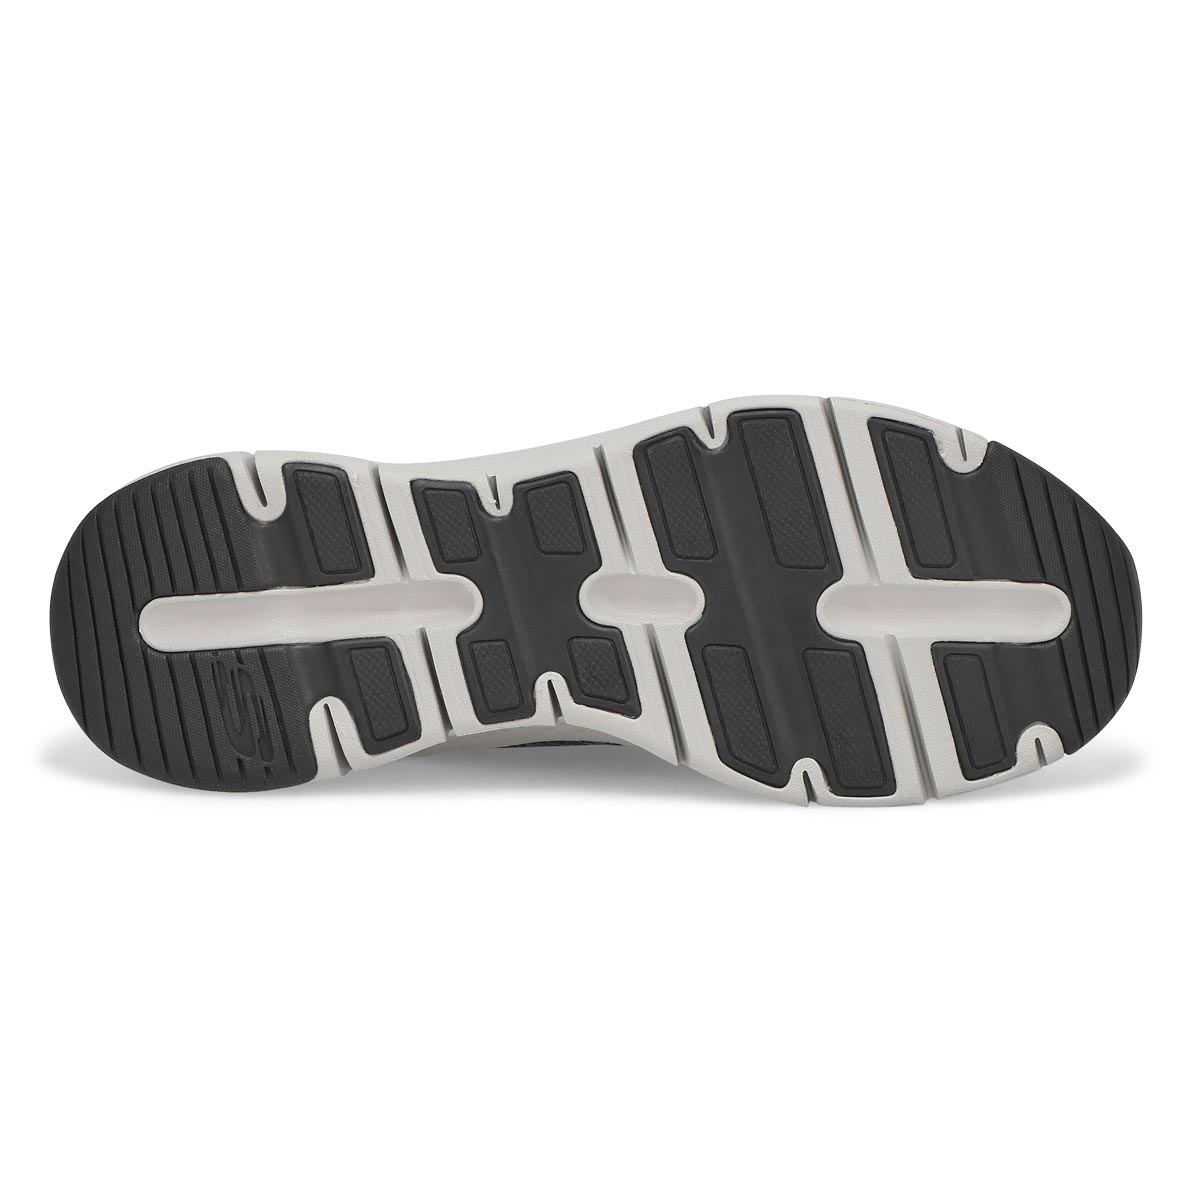 Men's Arch Fit Lace Up Sneaker - Black/Grey